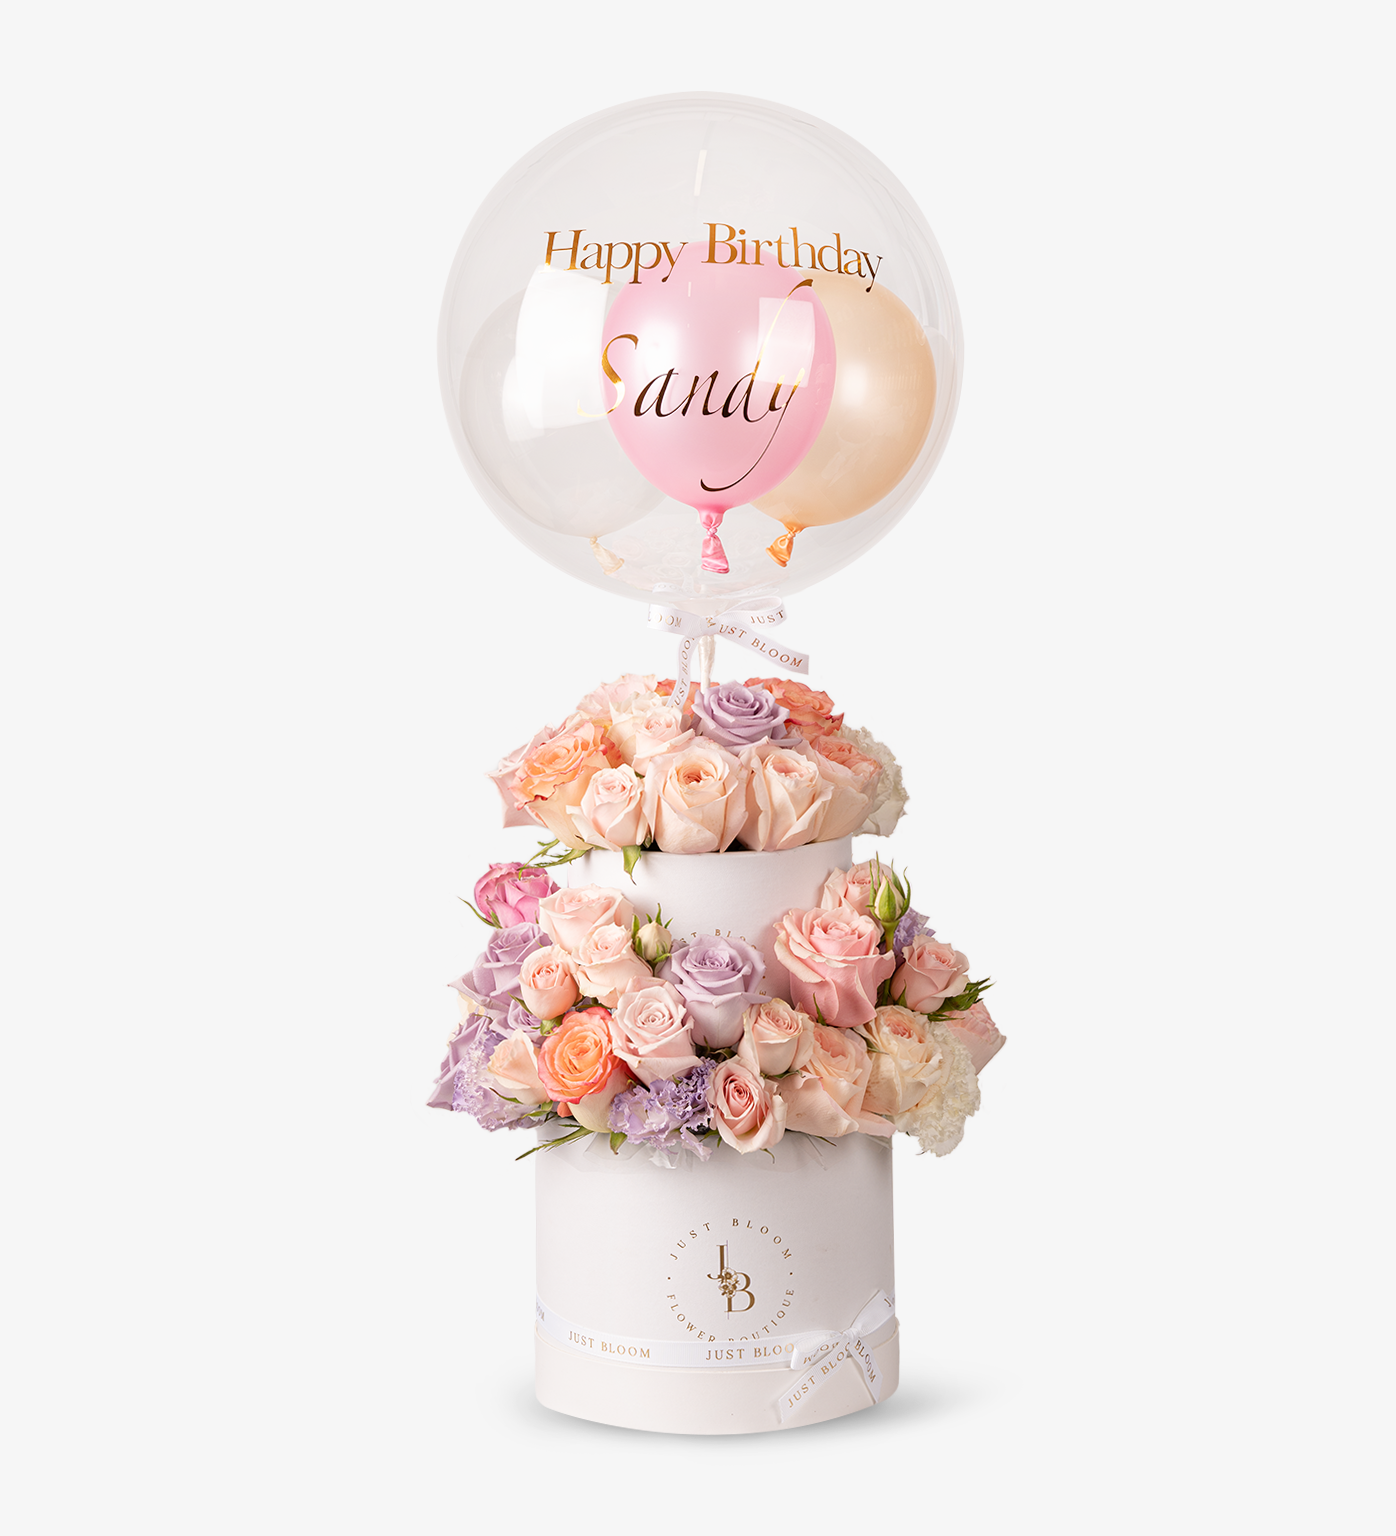 Just Bloom Enchanting Fresh Flower Box - Premium Ecuadorian Roses and Dutch Eustomas in Double Cake Layer Style